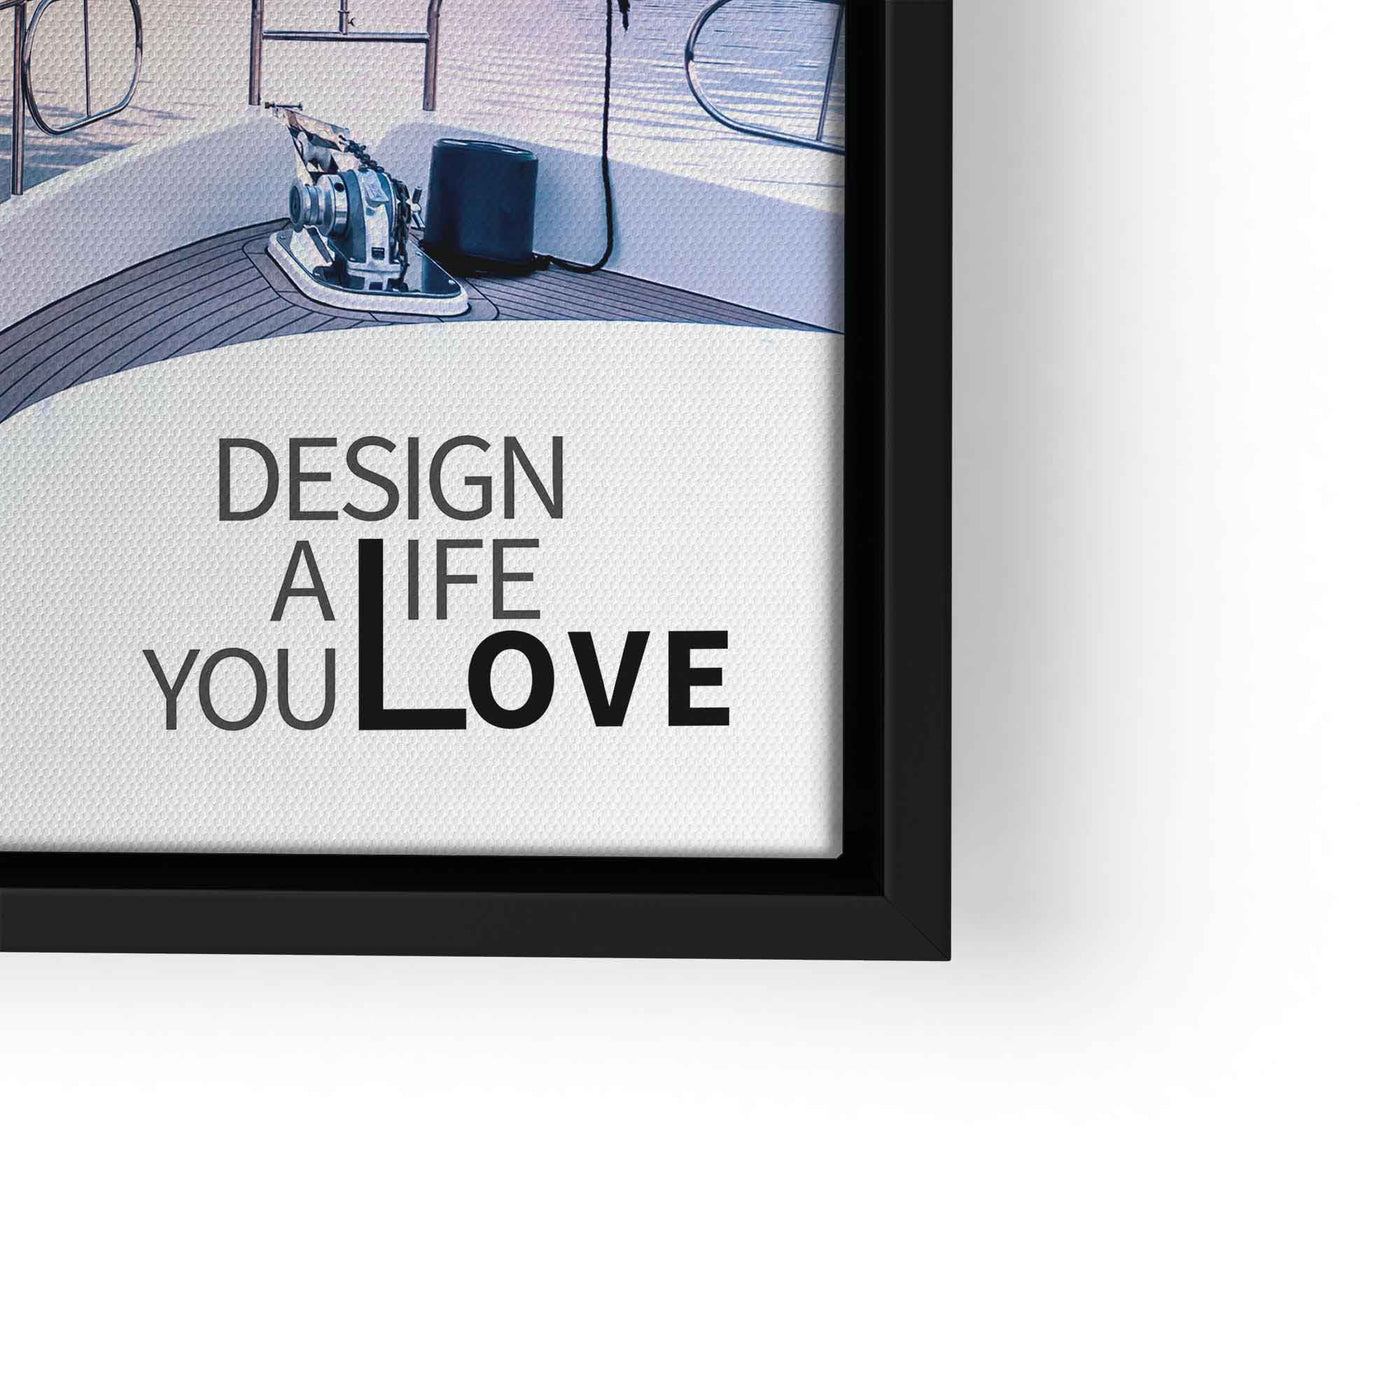 Design a life you love